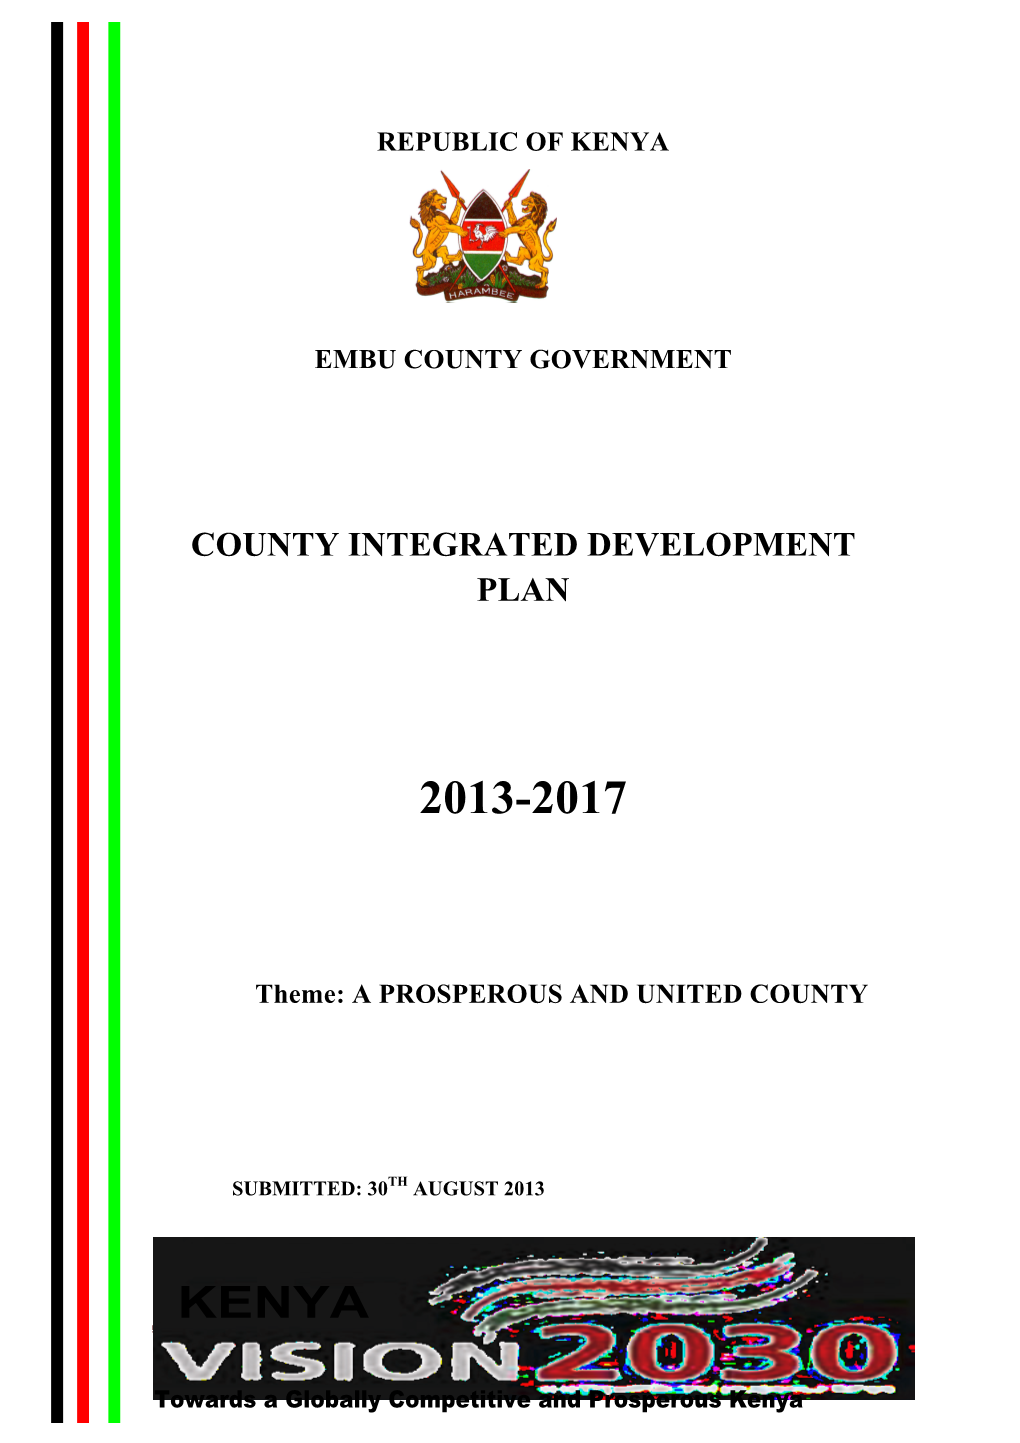 County Integrated Development Plan